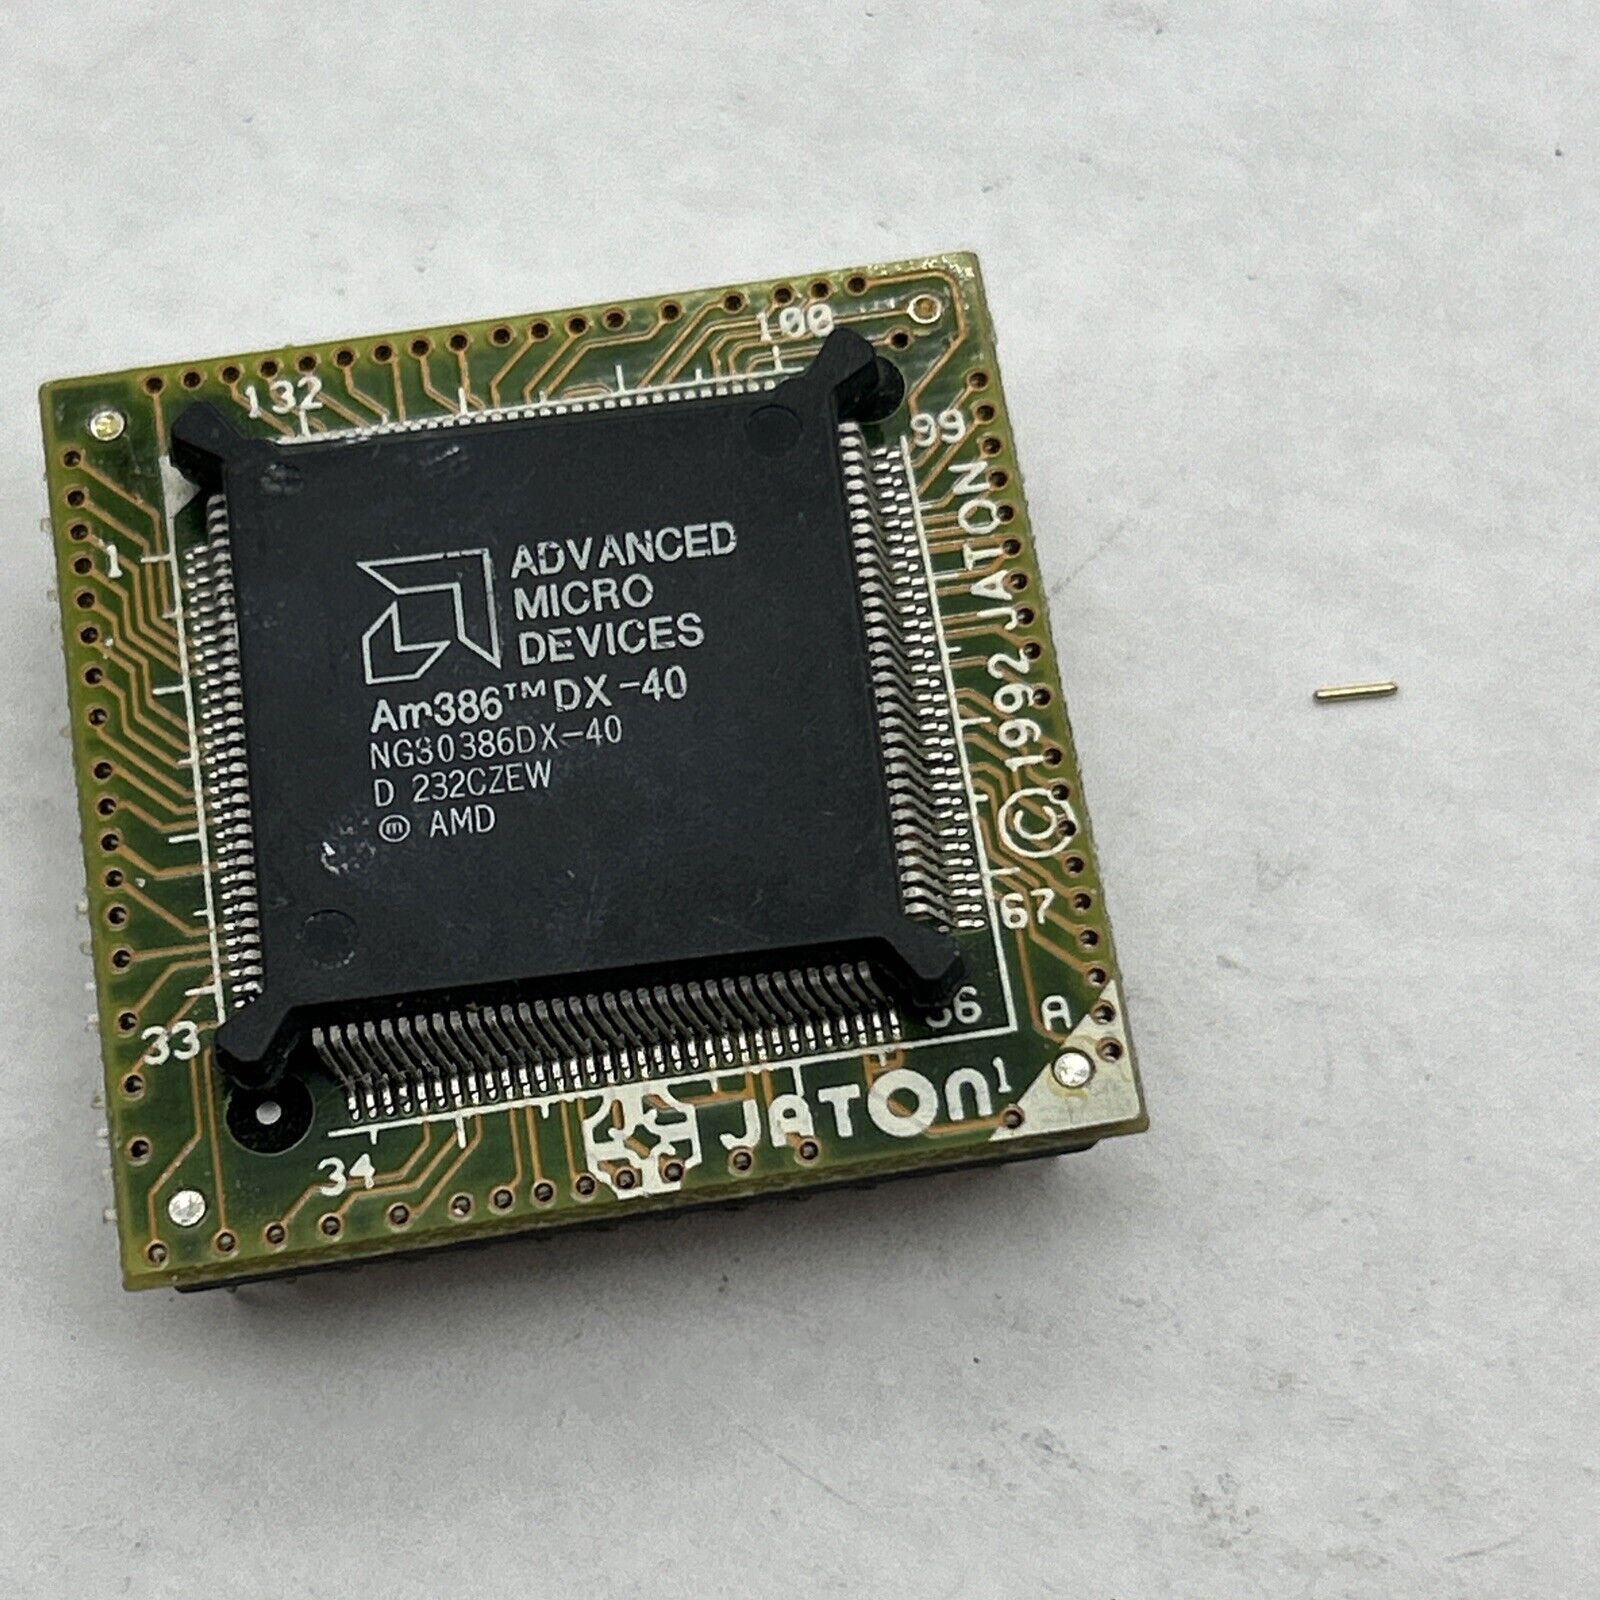 AMD 386 DX-40 80386 Am386 DX-40 DX PGA CPU Rare Vintage Processor Am386 *AS-IS